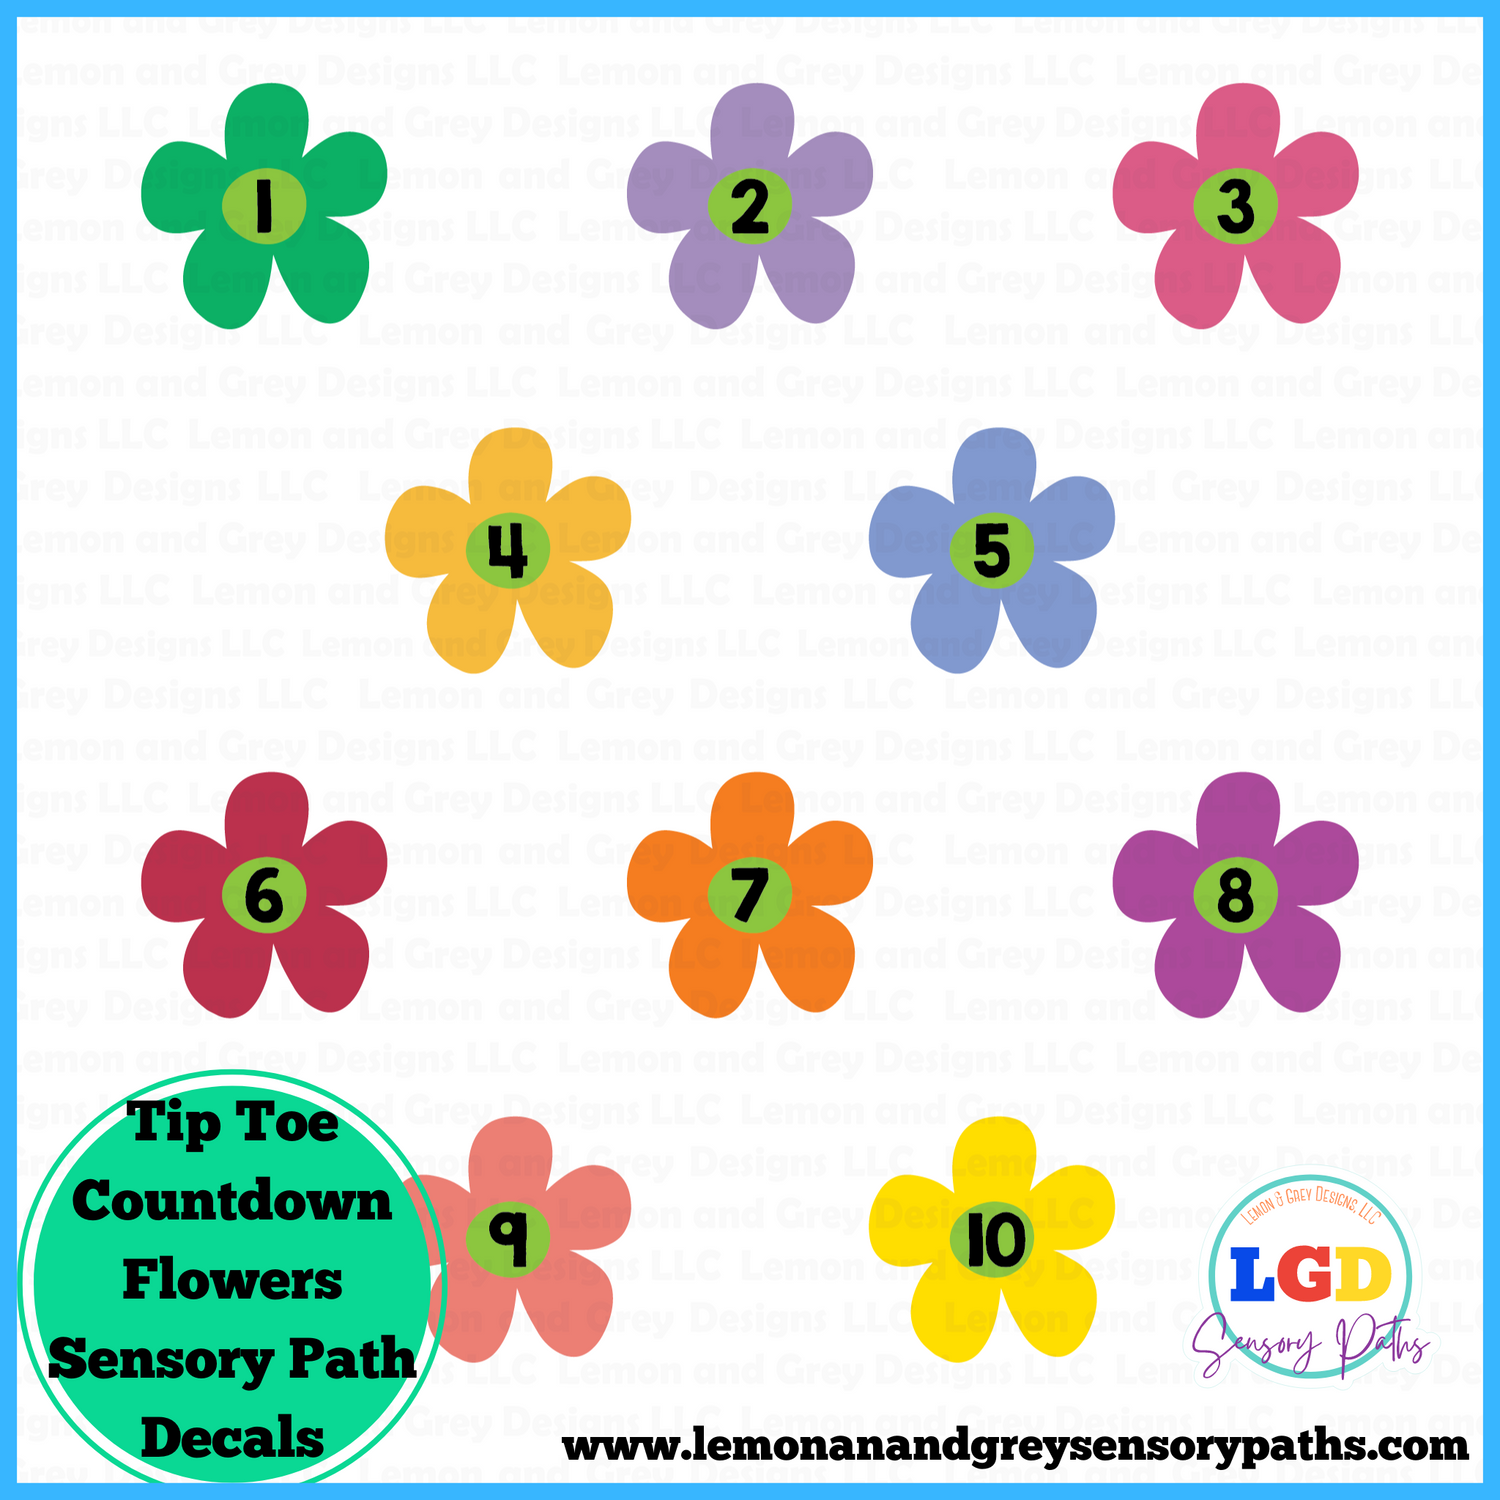 Lemon and Grey Sensory Paths | Tip Toe Countdown Flowers